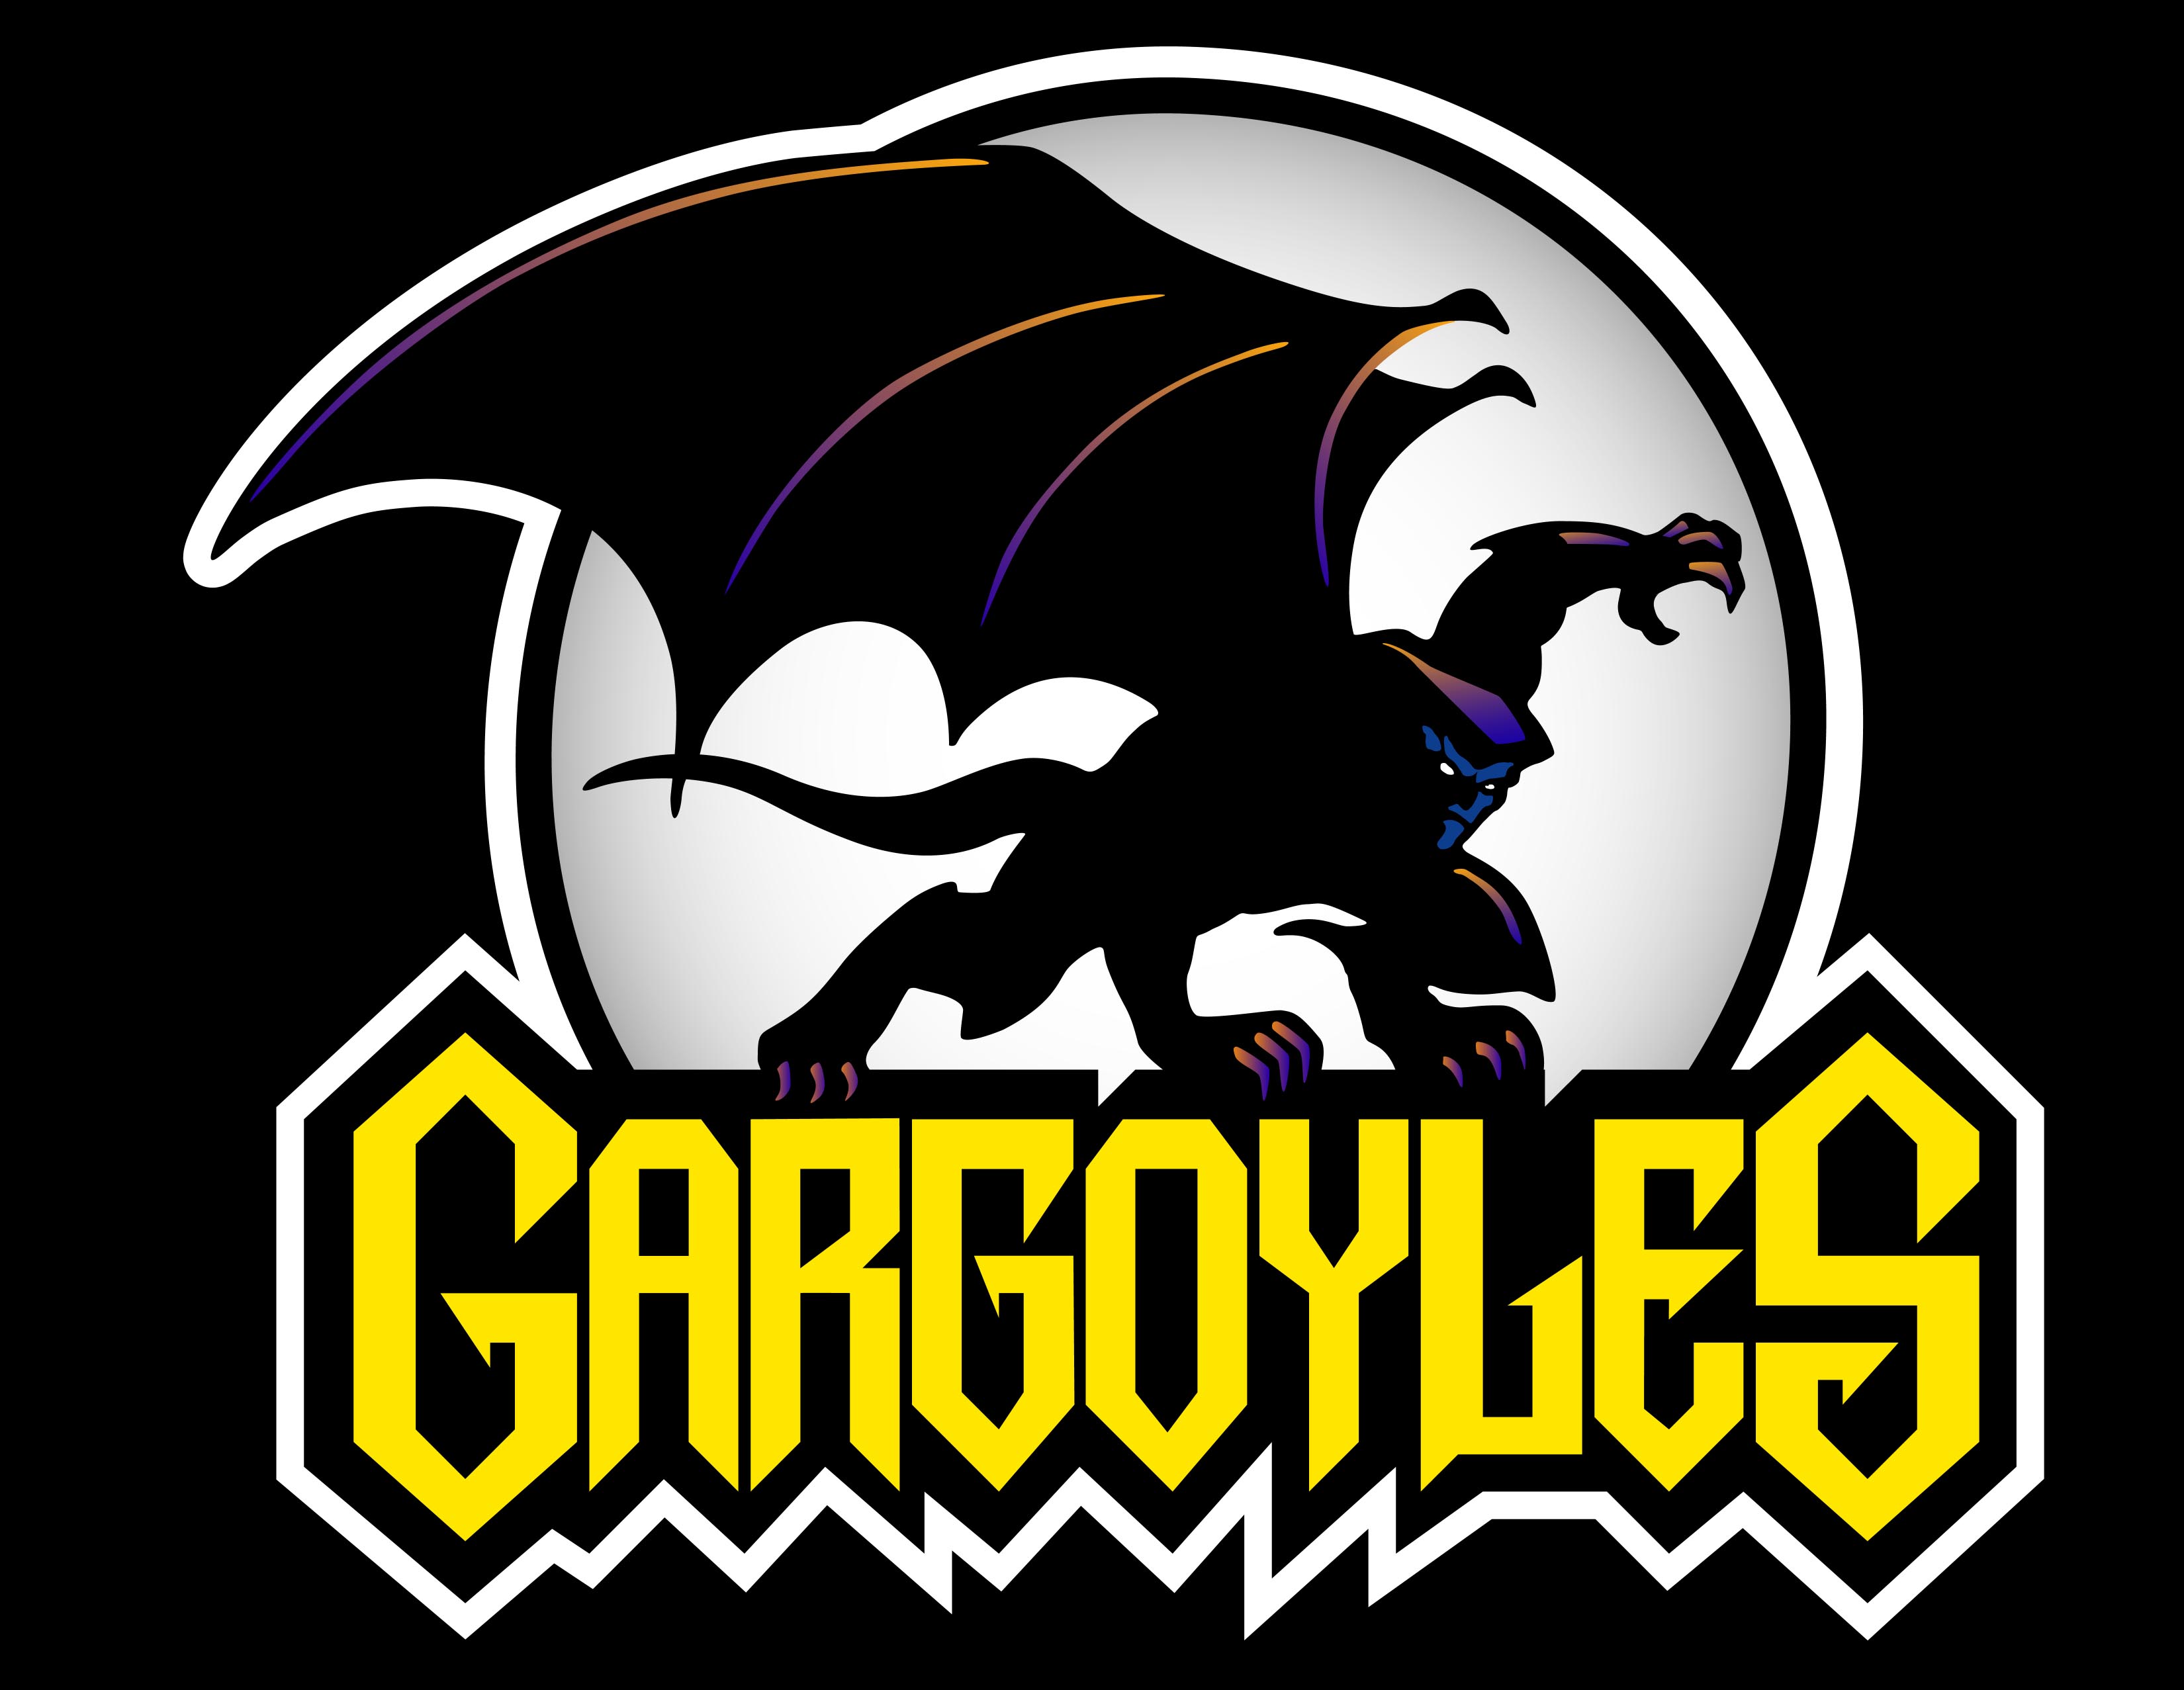 download gargoyles graphic novel